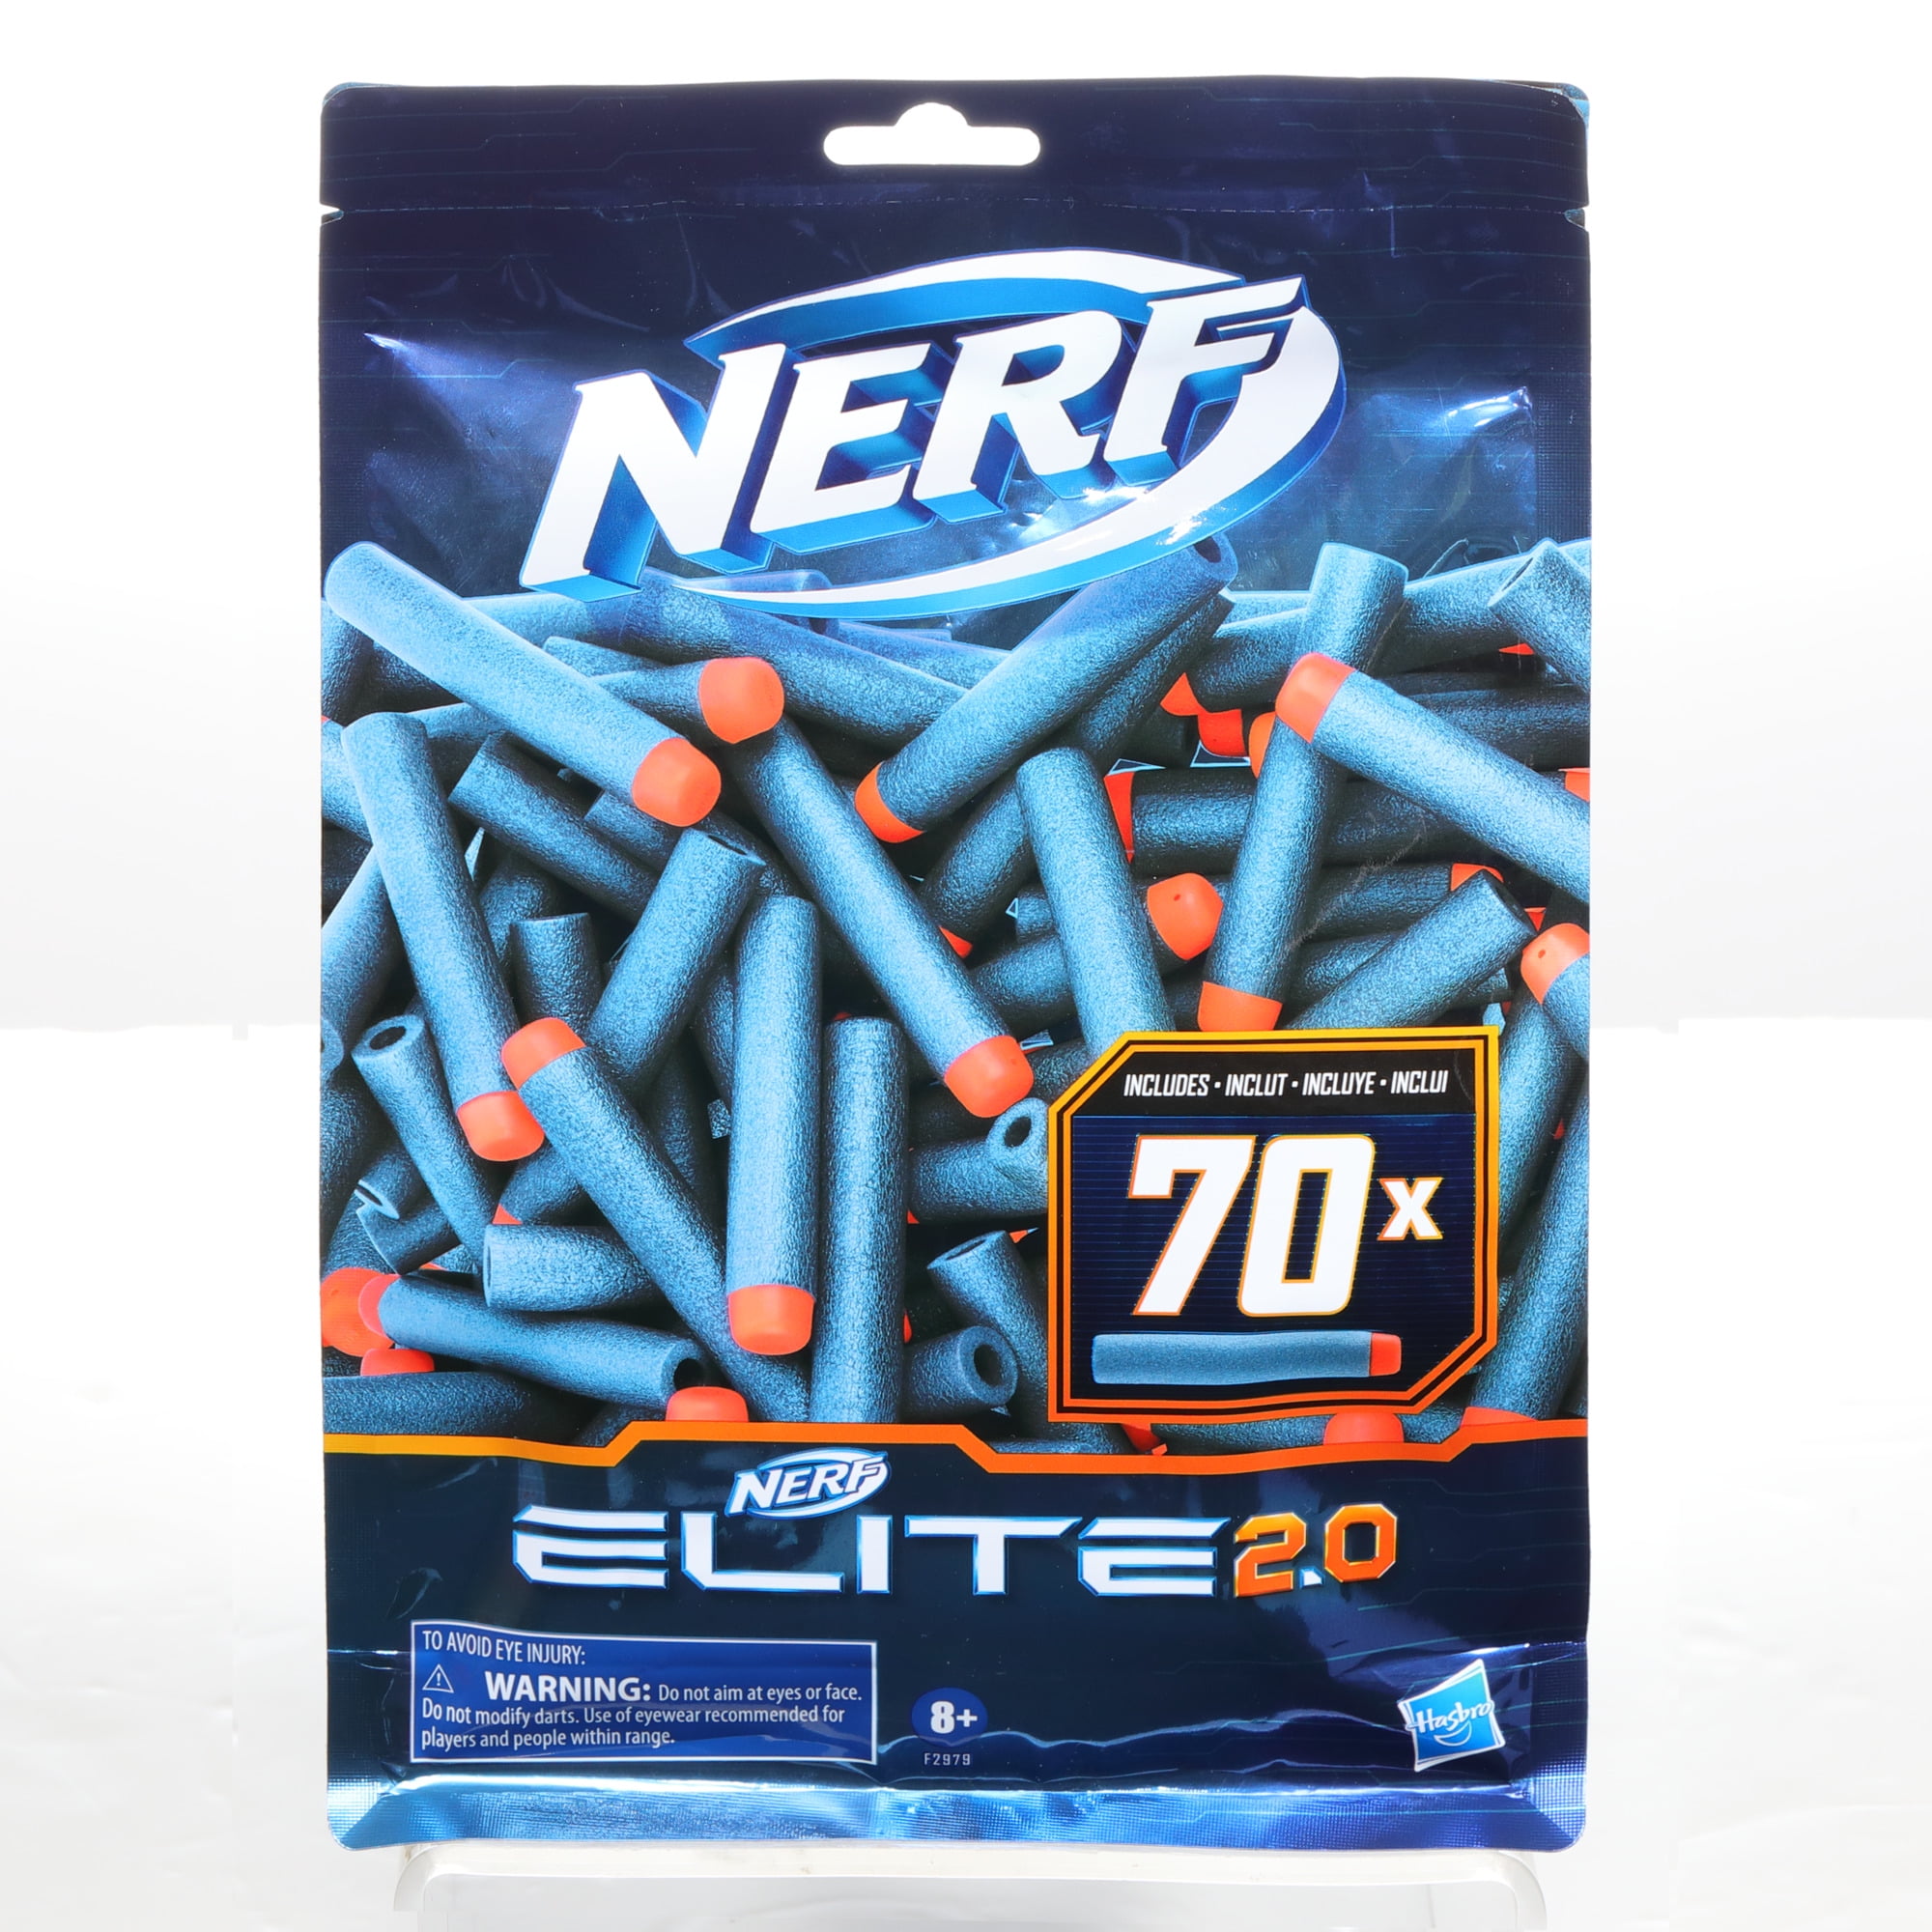 800PC Refill Bullet Darts for Nerf toy Gun N-strike Elite Series Safety Kids Toy 